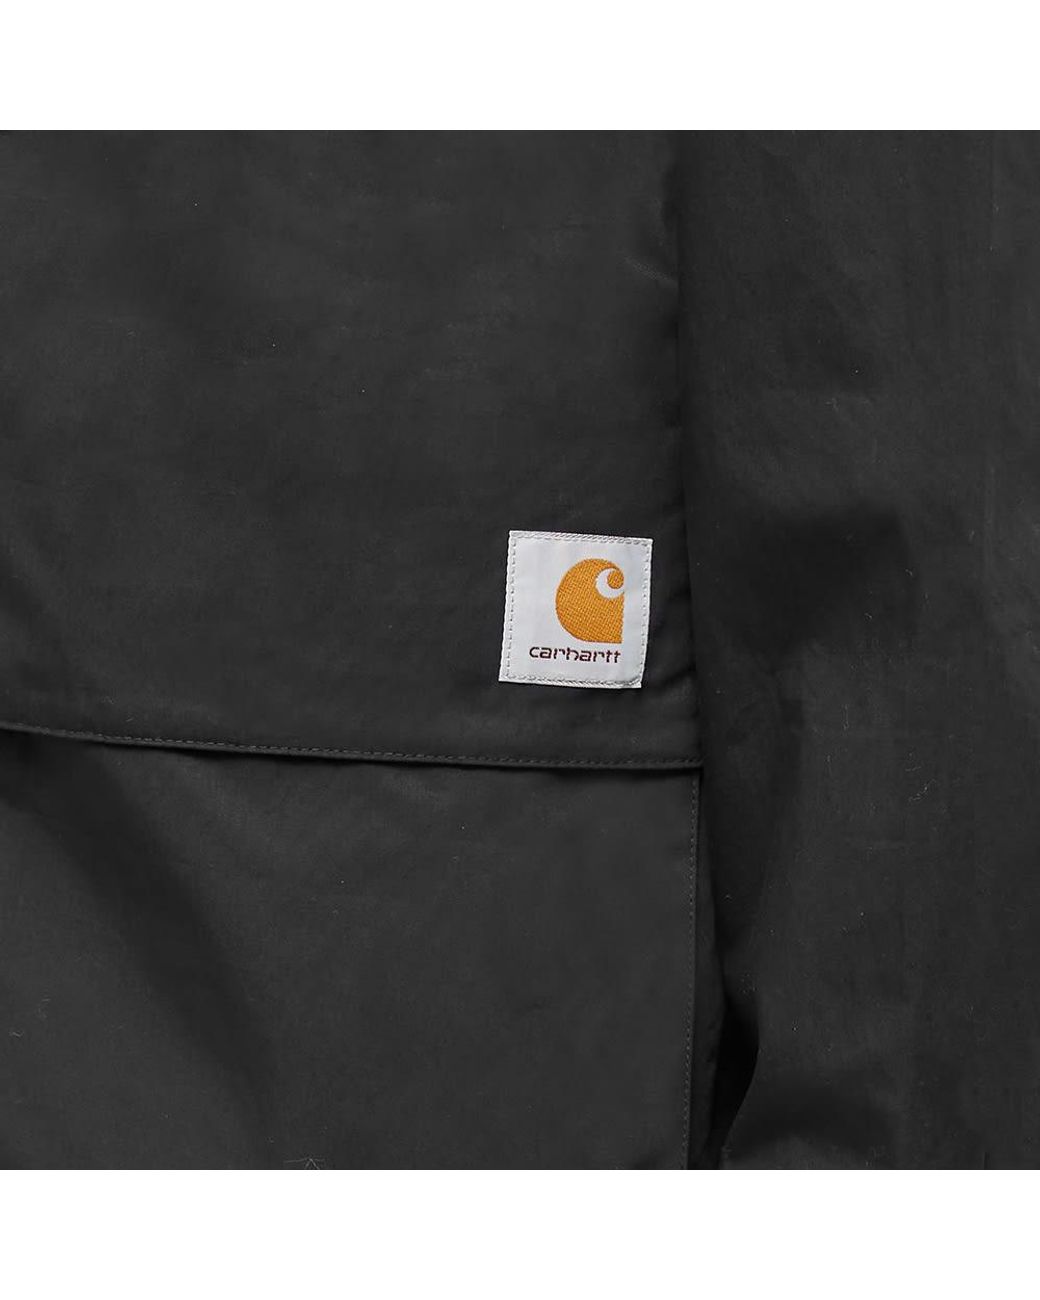 Carhartt WIP Darper Jacket in Black for Men | Lyst